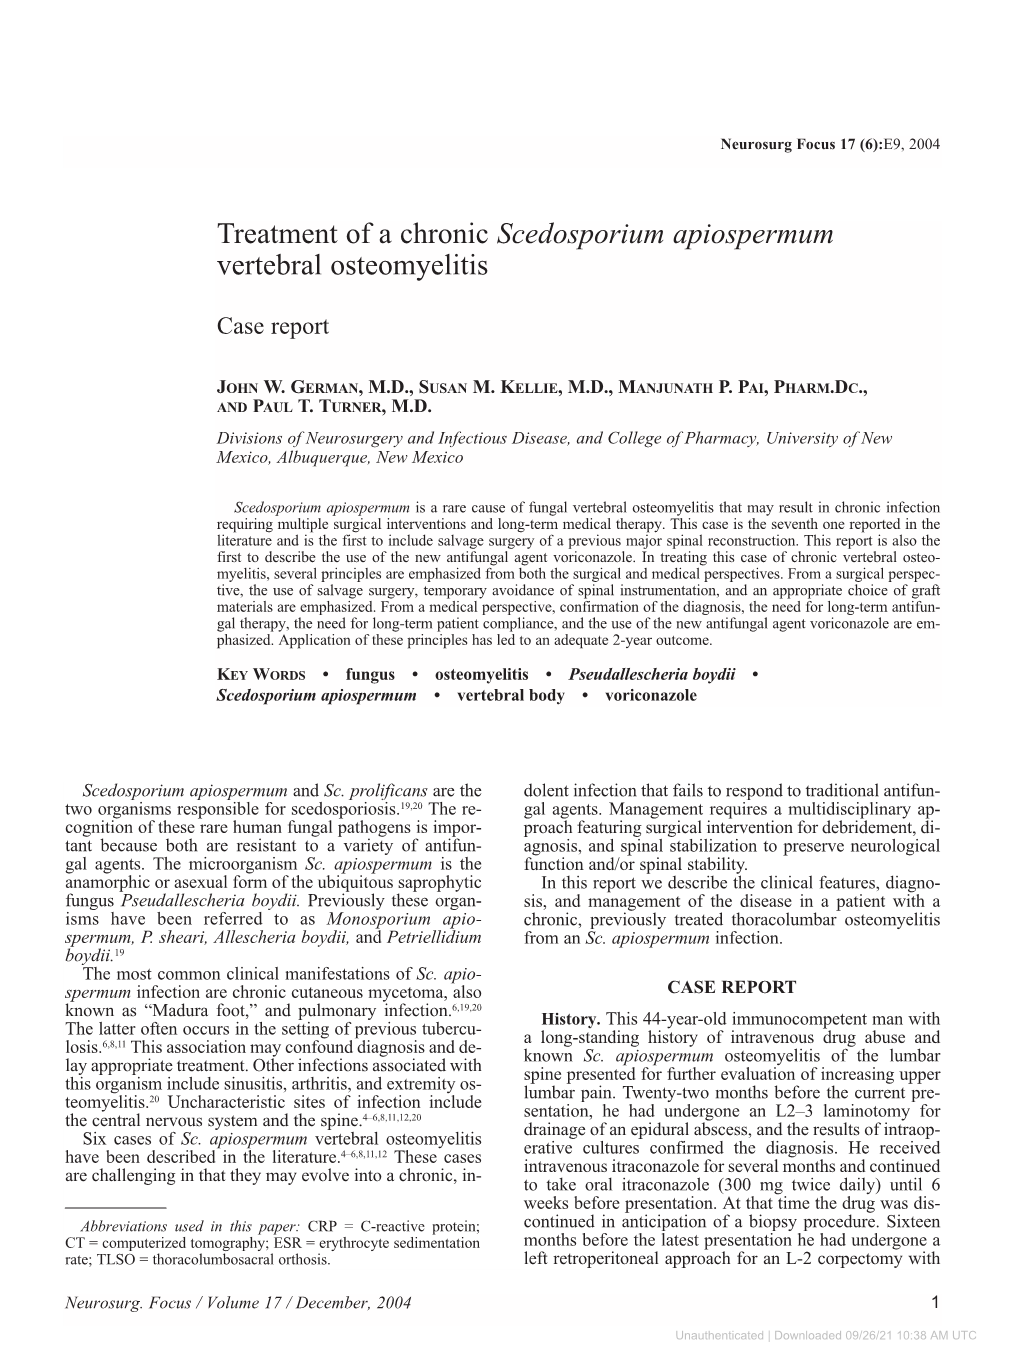 Treatment of a Chronic Scedosporium Apiospermum Vertebral Osteomyelitis